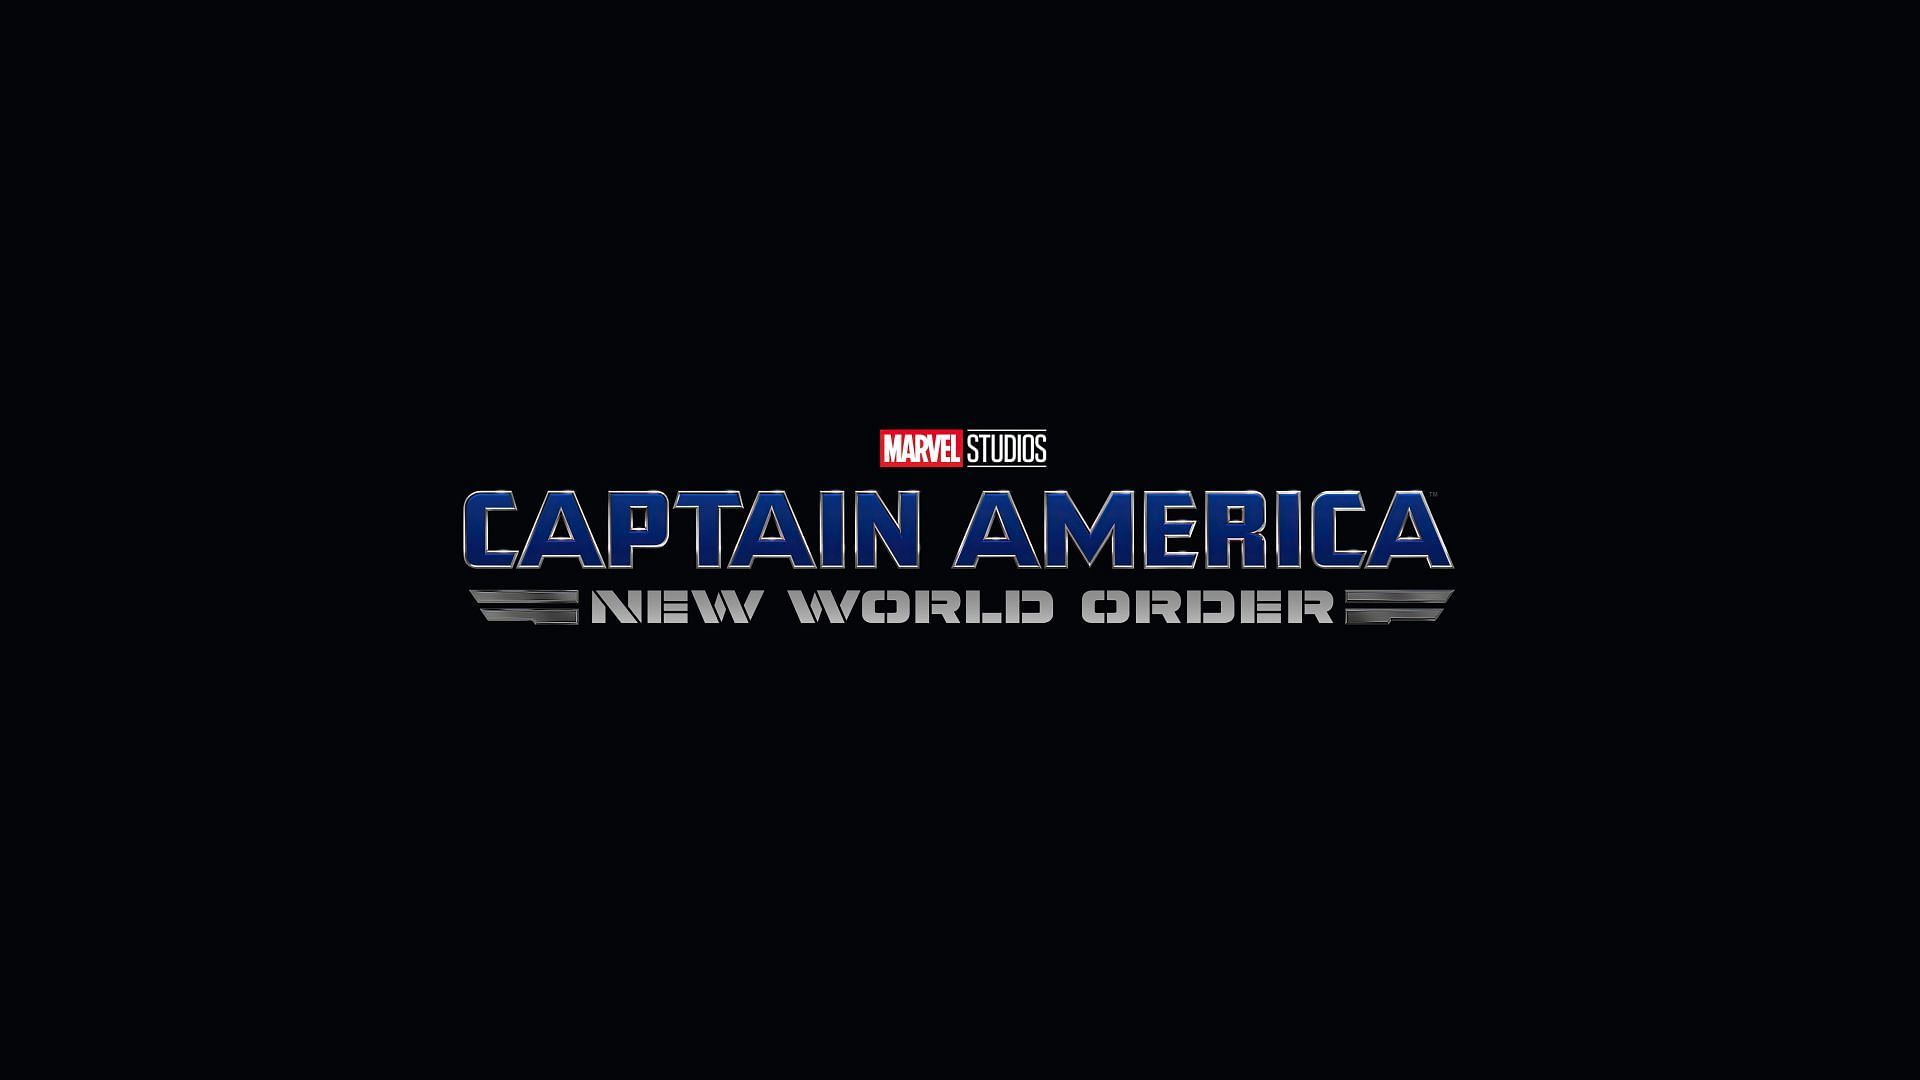 Captain America: New World Order is written by Malcolm Spellman, (Image via Marvel)